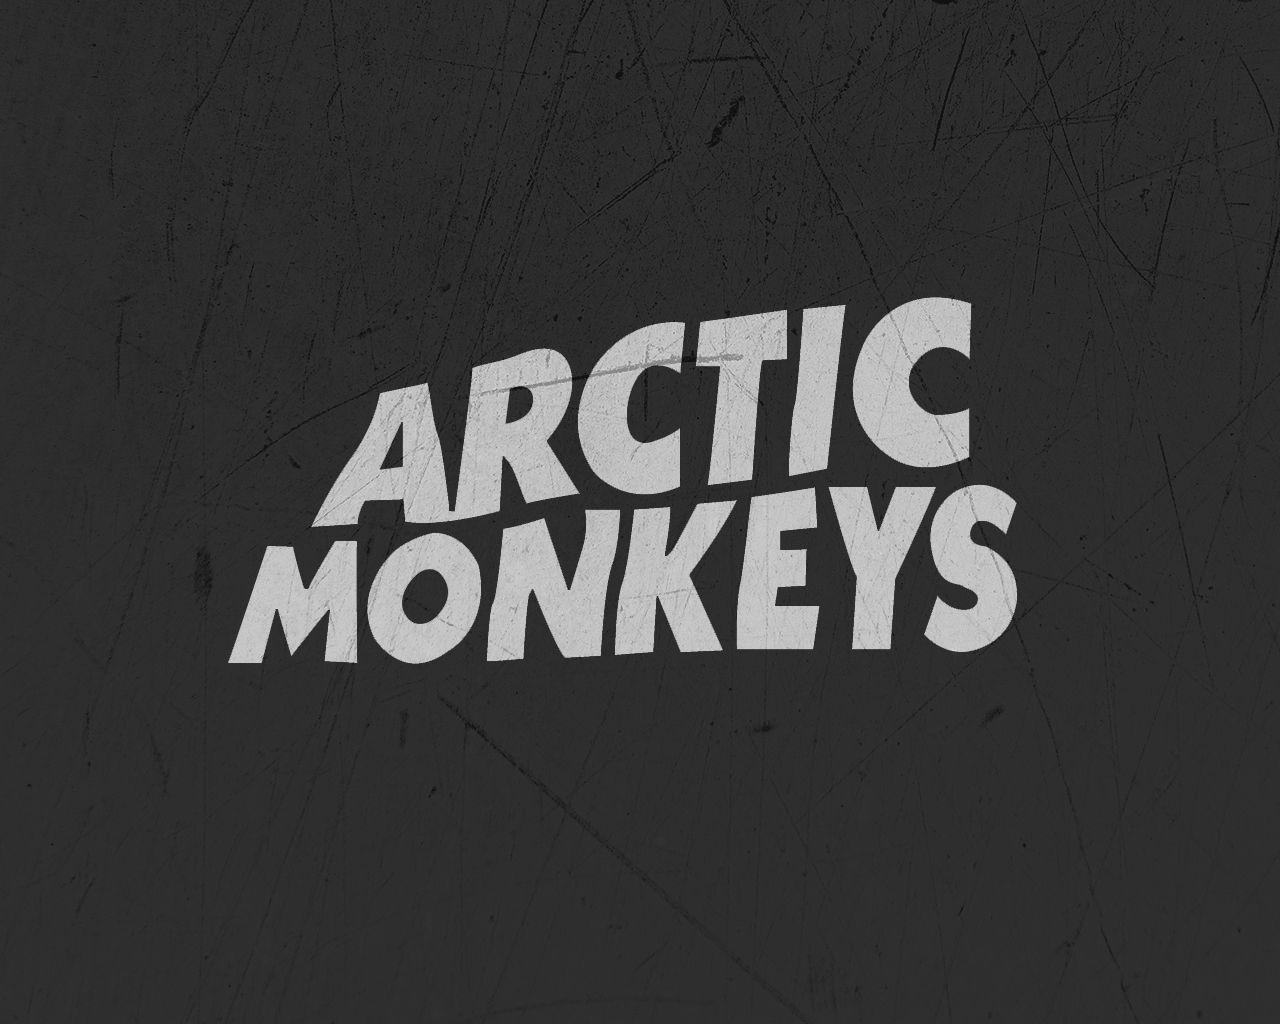 Arctic Monkeys Ultra HD Desktop Background Wallpaper for 4K UHD TV   Widescreen  UltraWide Desktop  Laptop  Multi Display Dual Monitor   Tablet  Smartphone